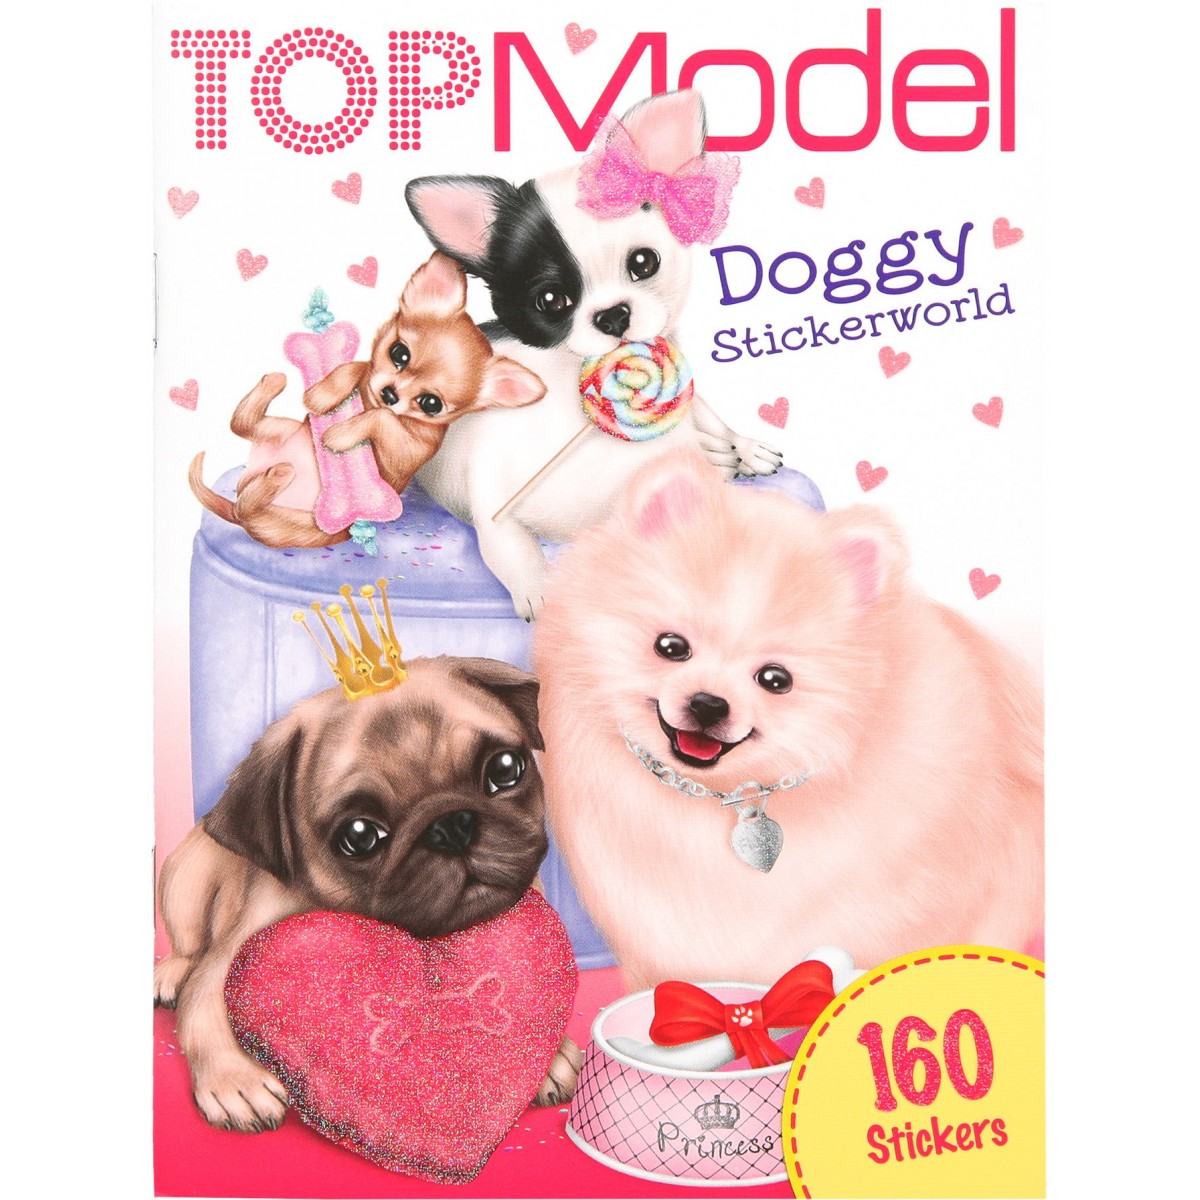 Depesche - TOPModel - Pocket Stickerworld Doggy